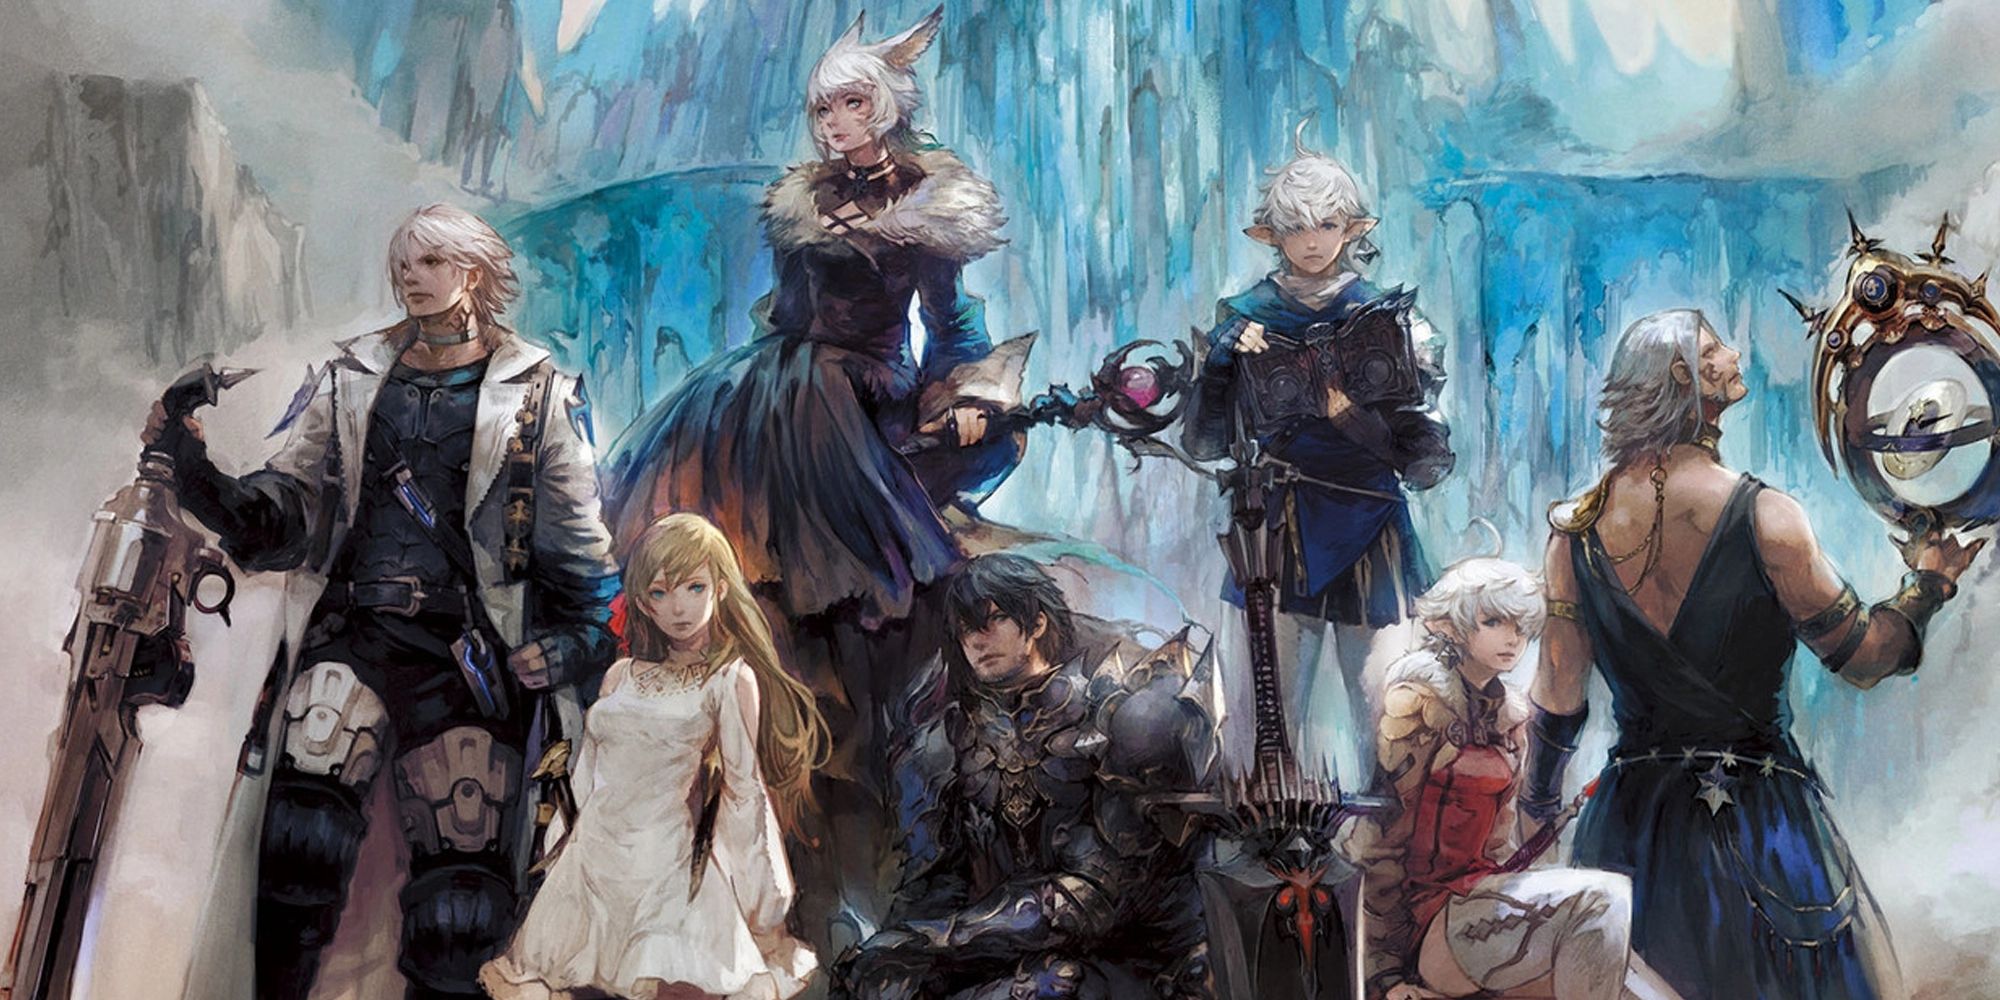 Characters posing in Final Fantasy XIV.